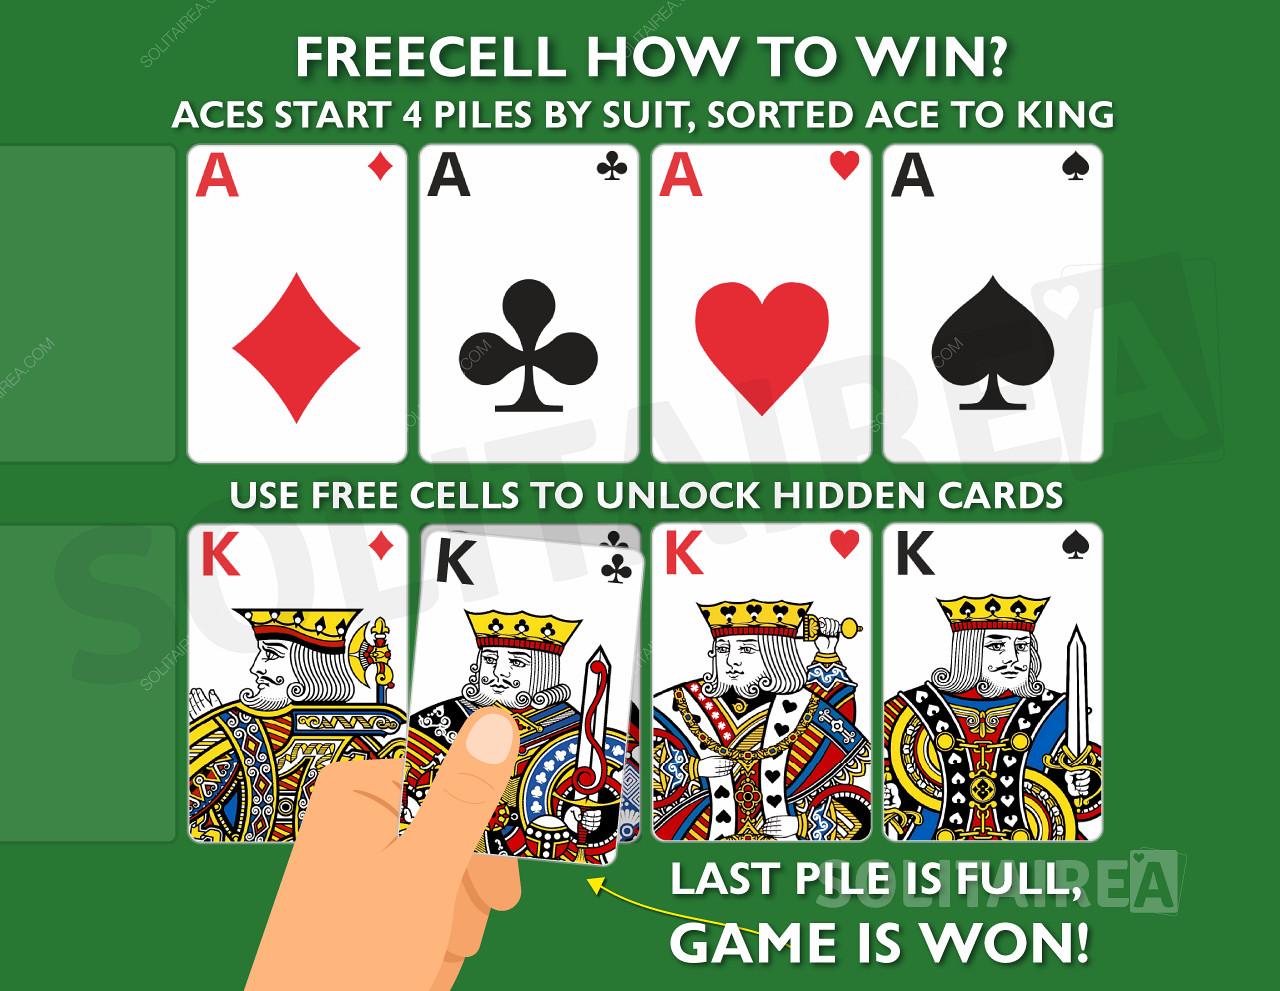 Como ganhar o jogo? Completar os 4 montes de cartas do mesmo naipe, ordenadas de Ás a Rei.